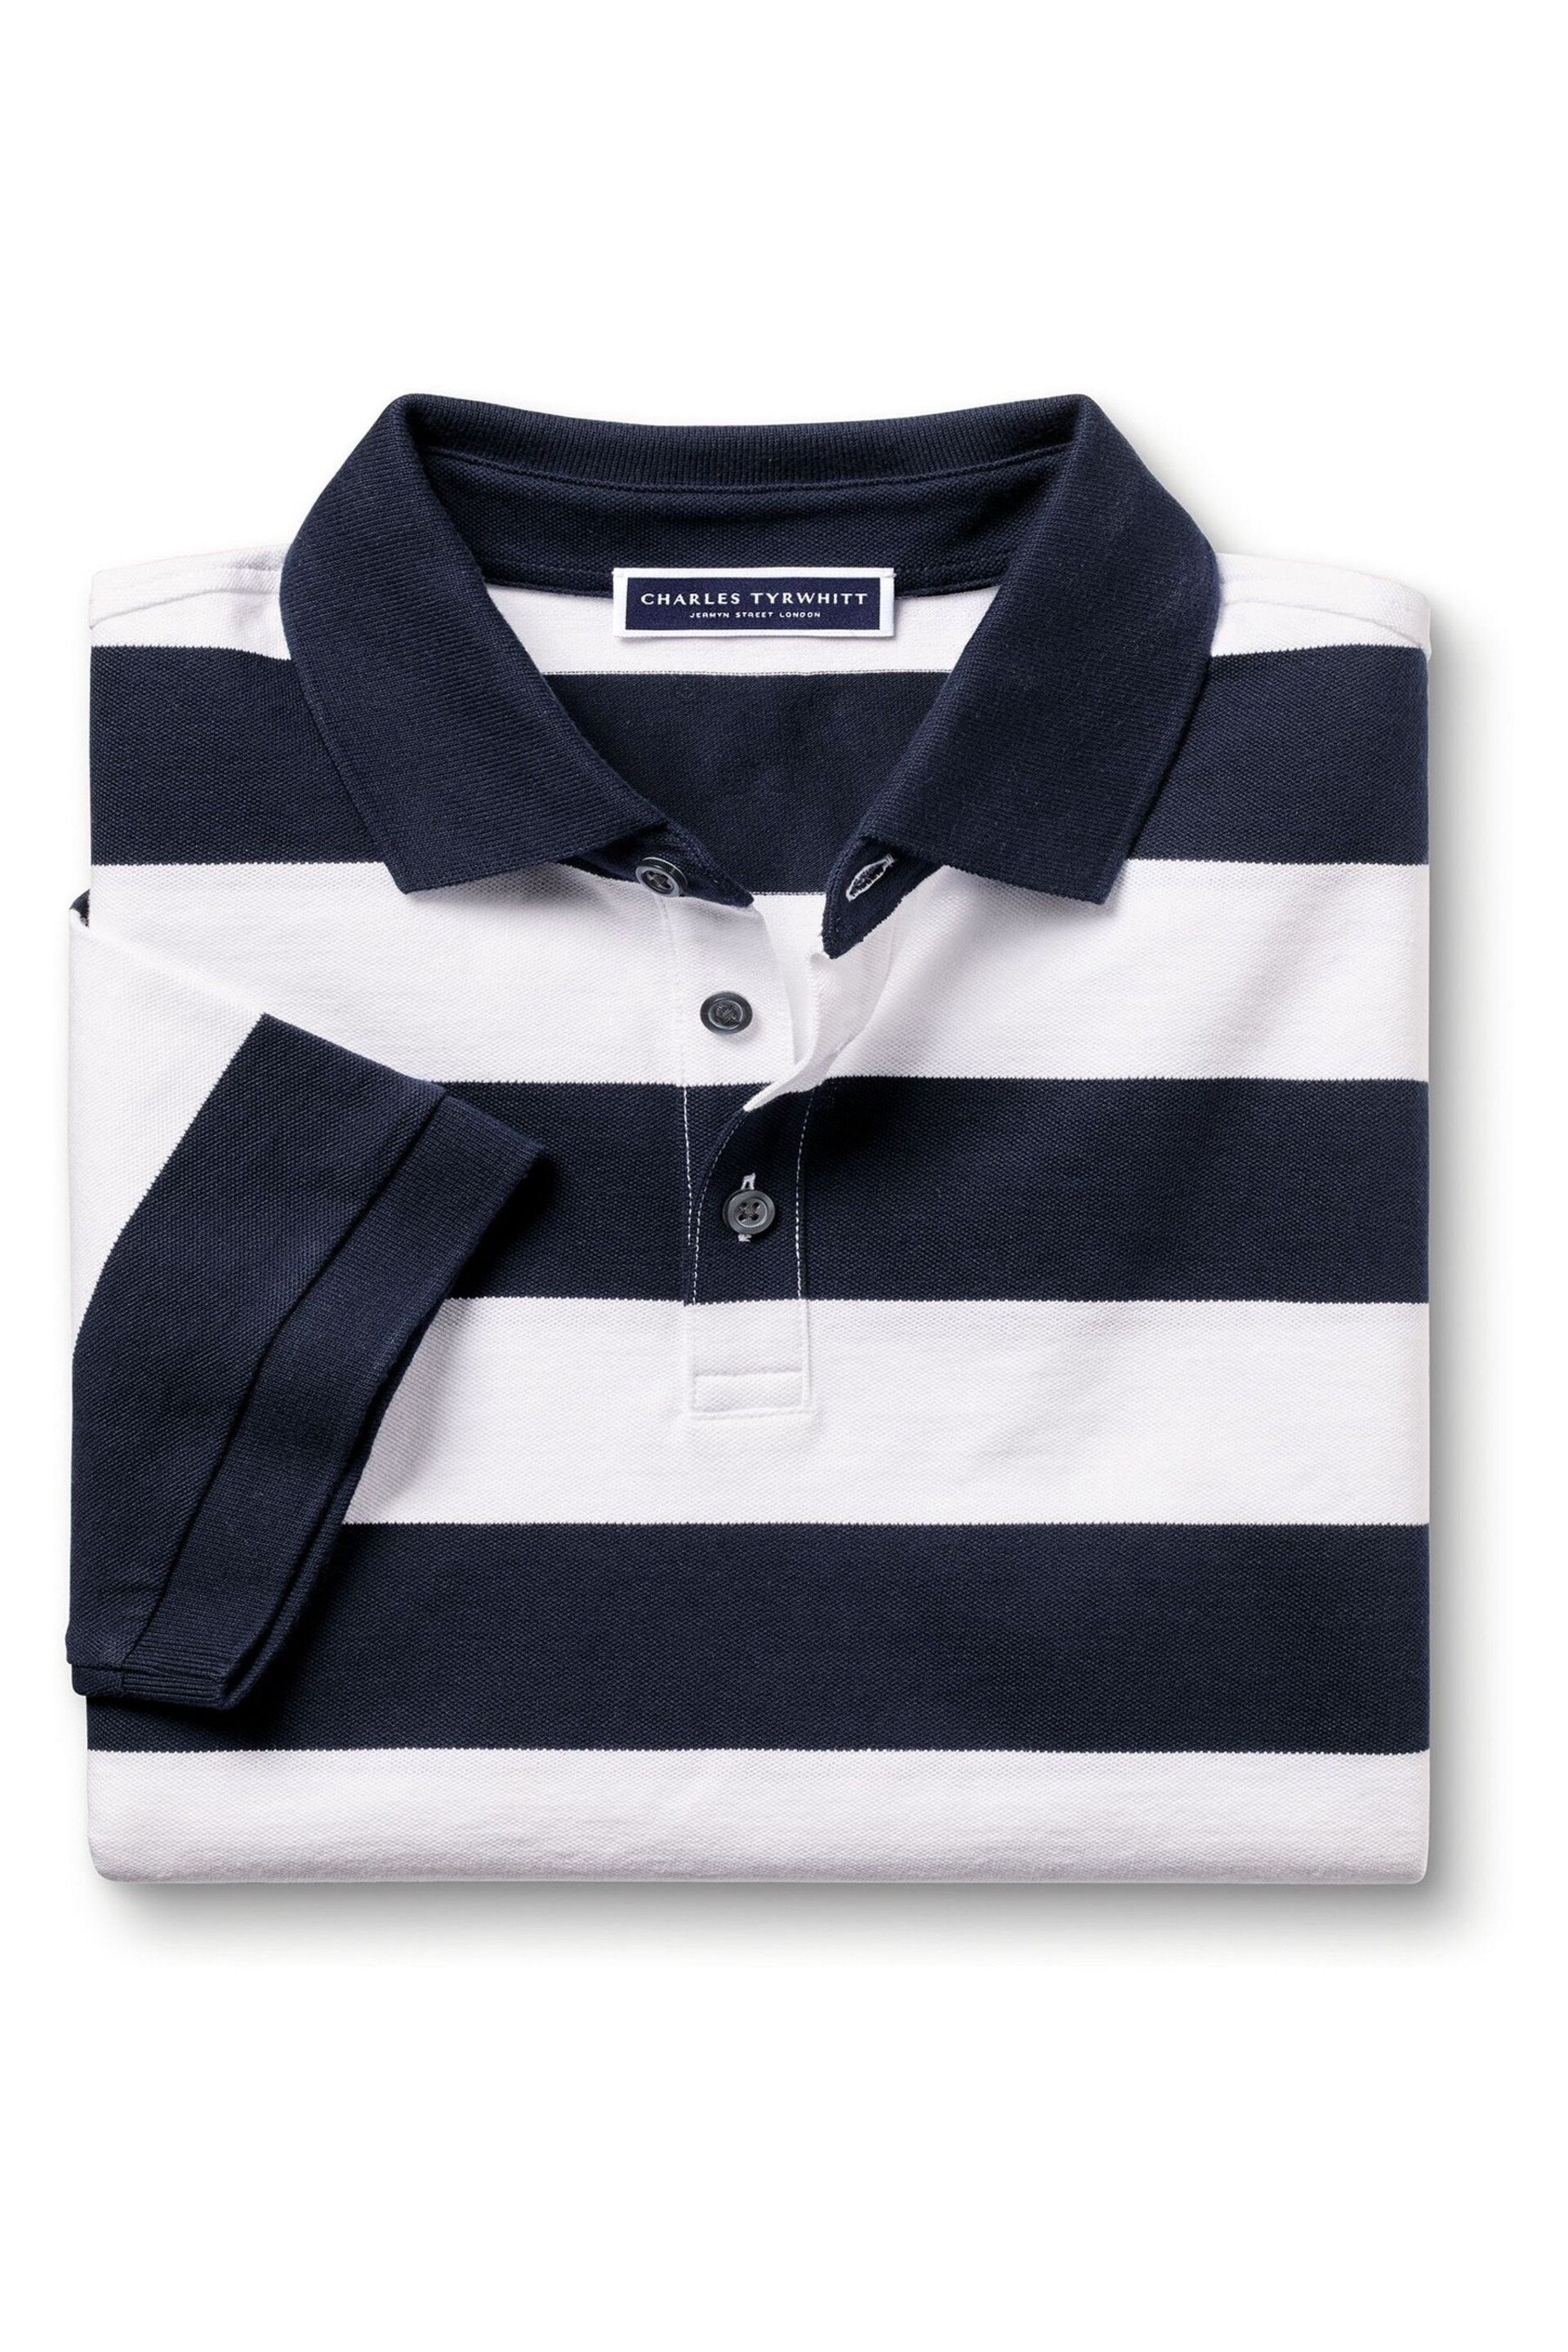 Charles Tyrwhitt Blue Short Sleeve Cotton Stretch Pique Polo Shirt - Image 3 of 5